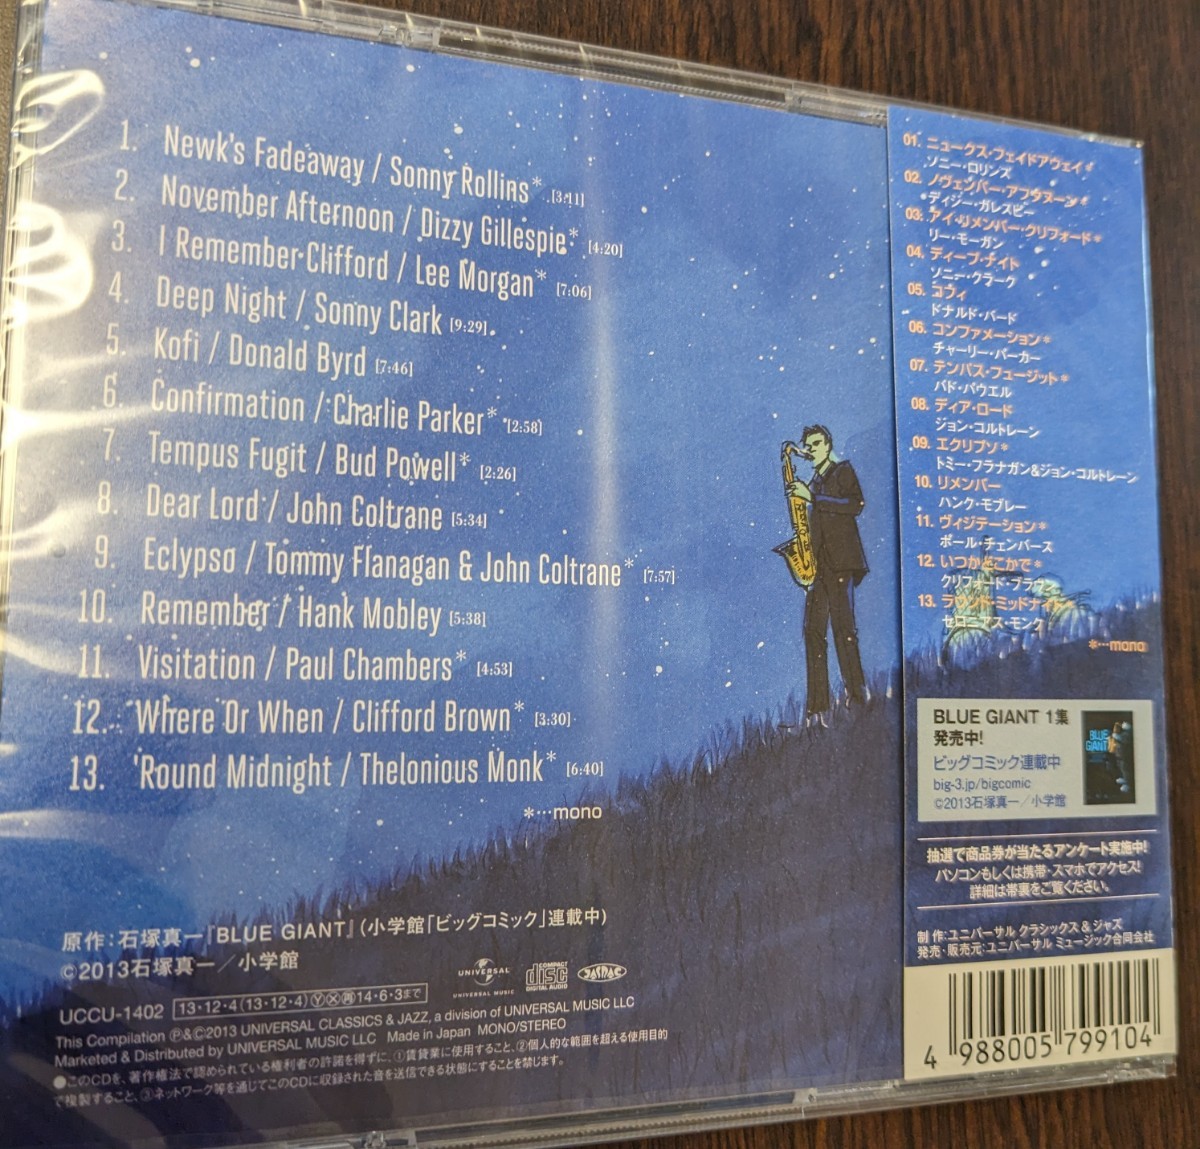 M 匿名配送 CD (V.A.) ブルー・ジャイアント 4988005799104 blue giant